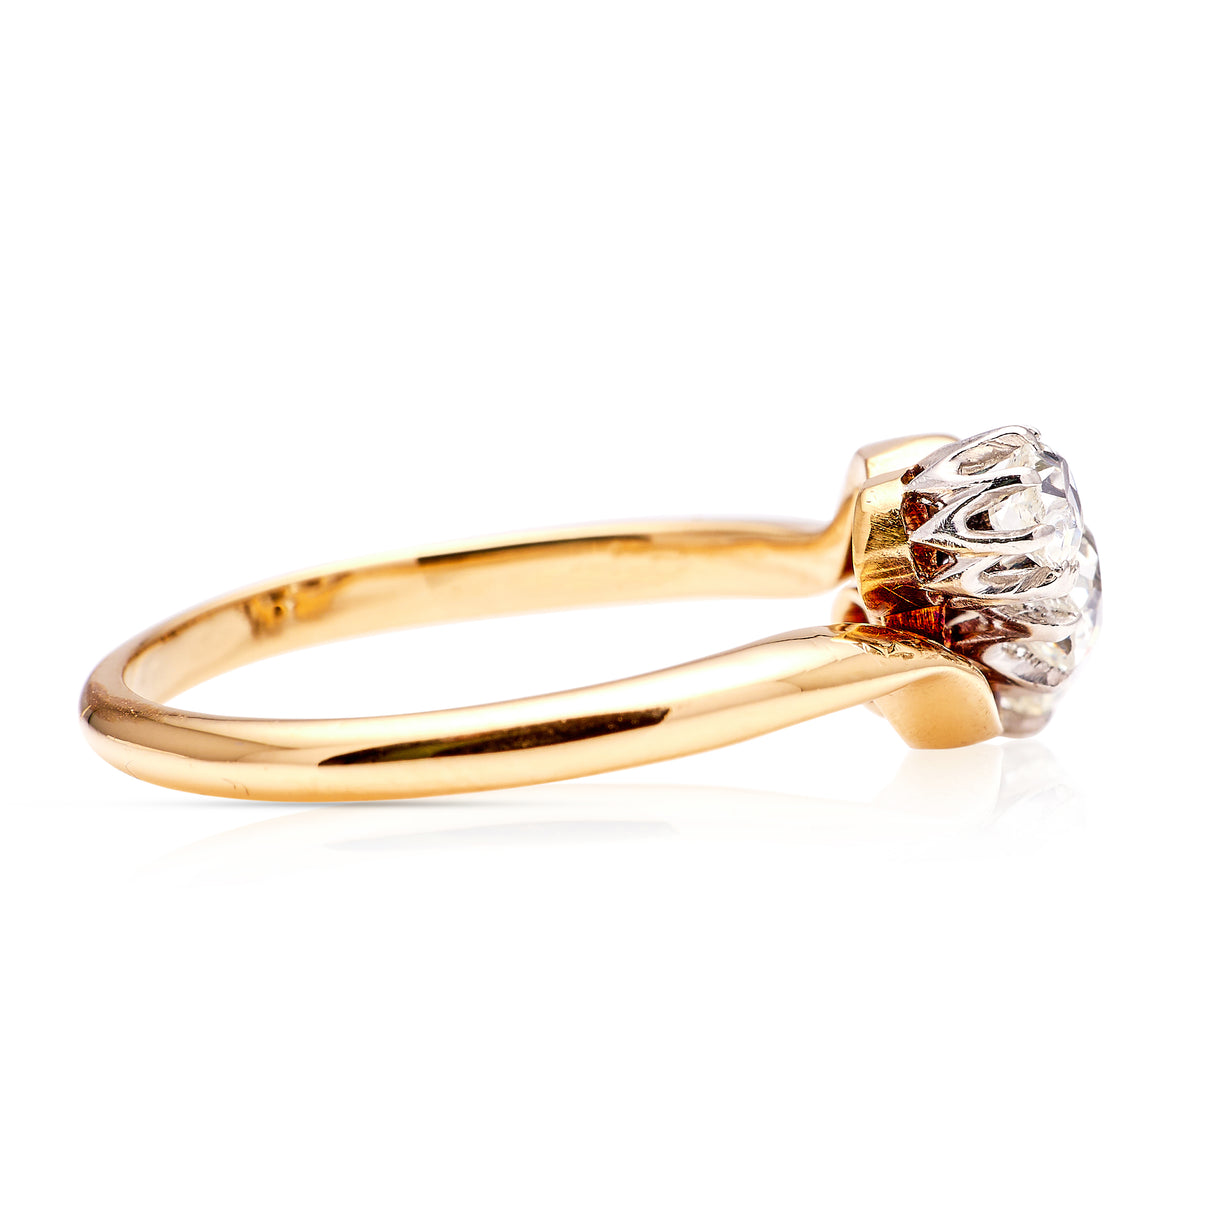 Antique, Edwardian three stone diamond engagement ring, 18ct yellow gold & platinum